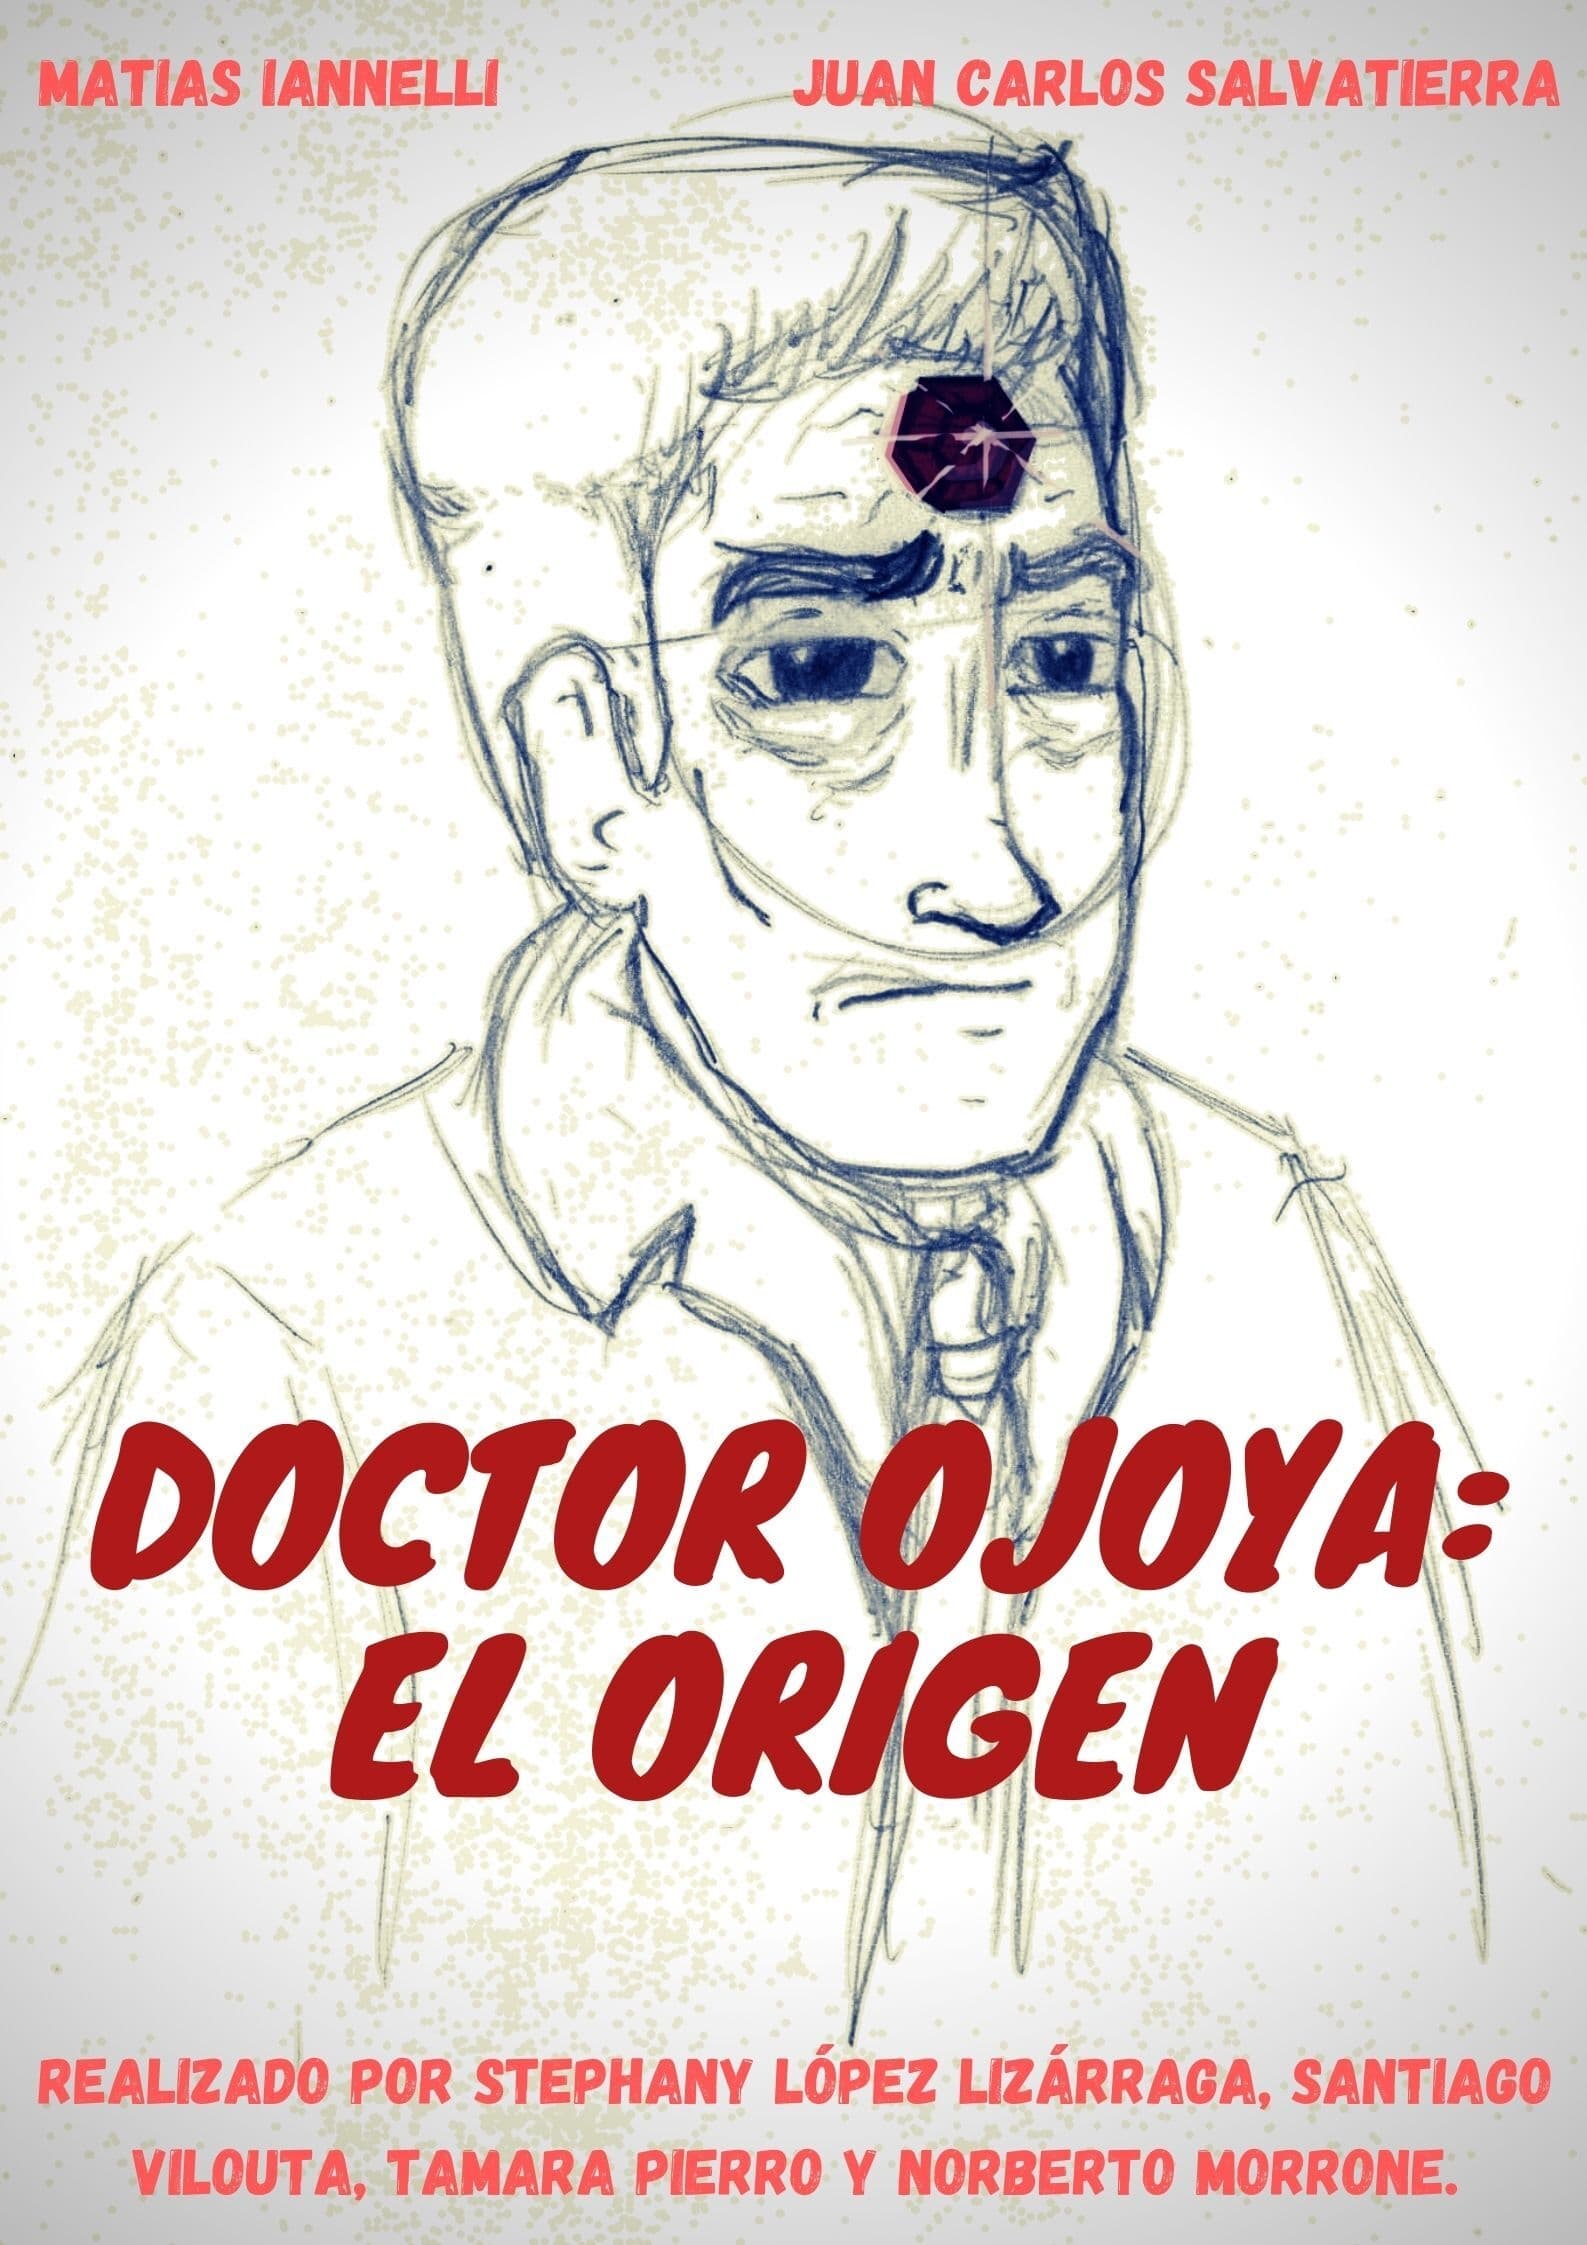 Doctor Ojoya: Origins